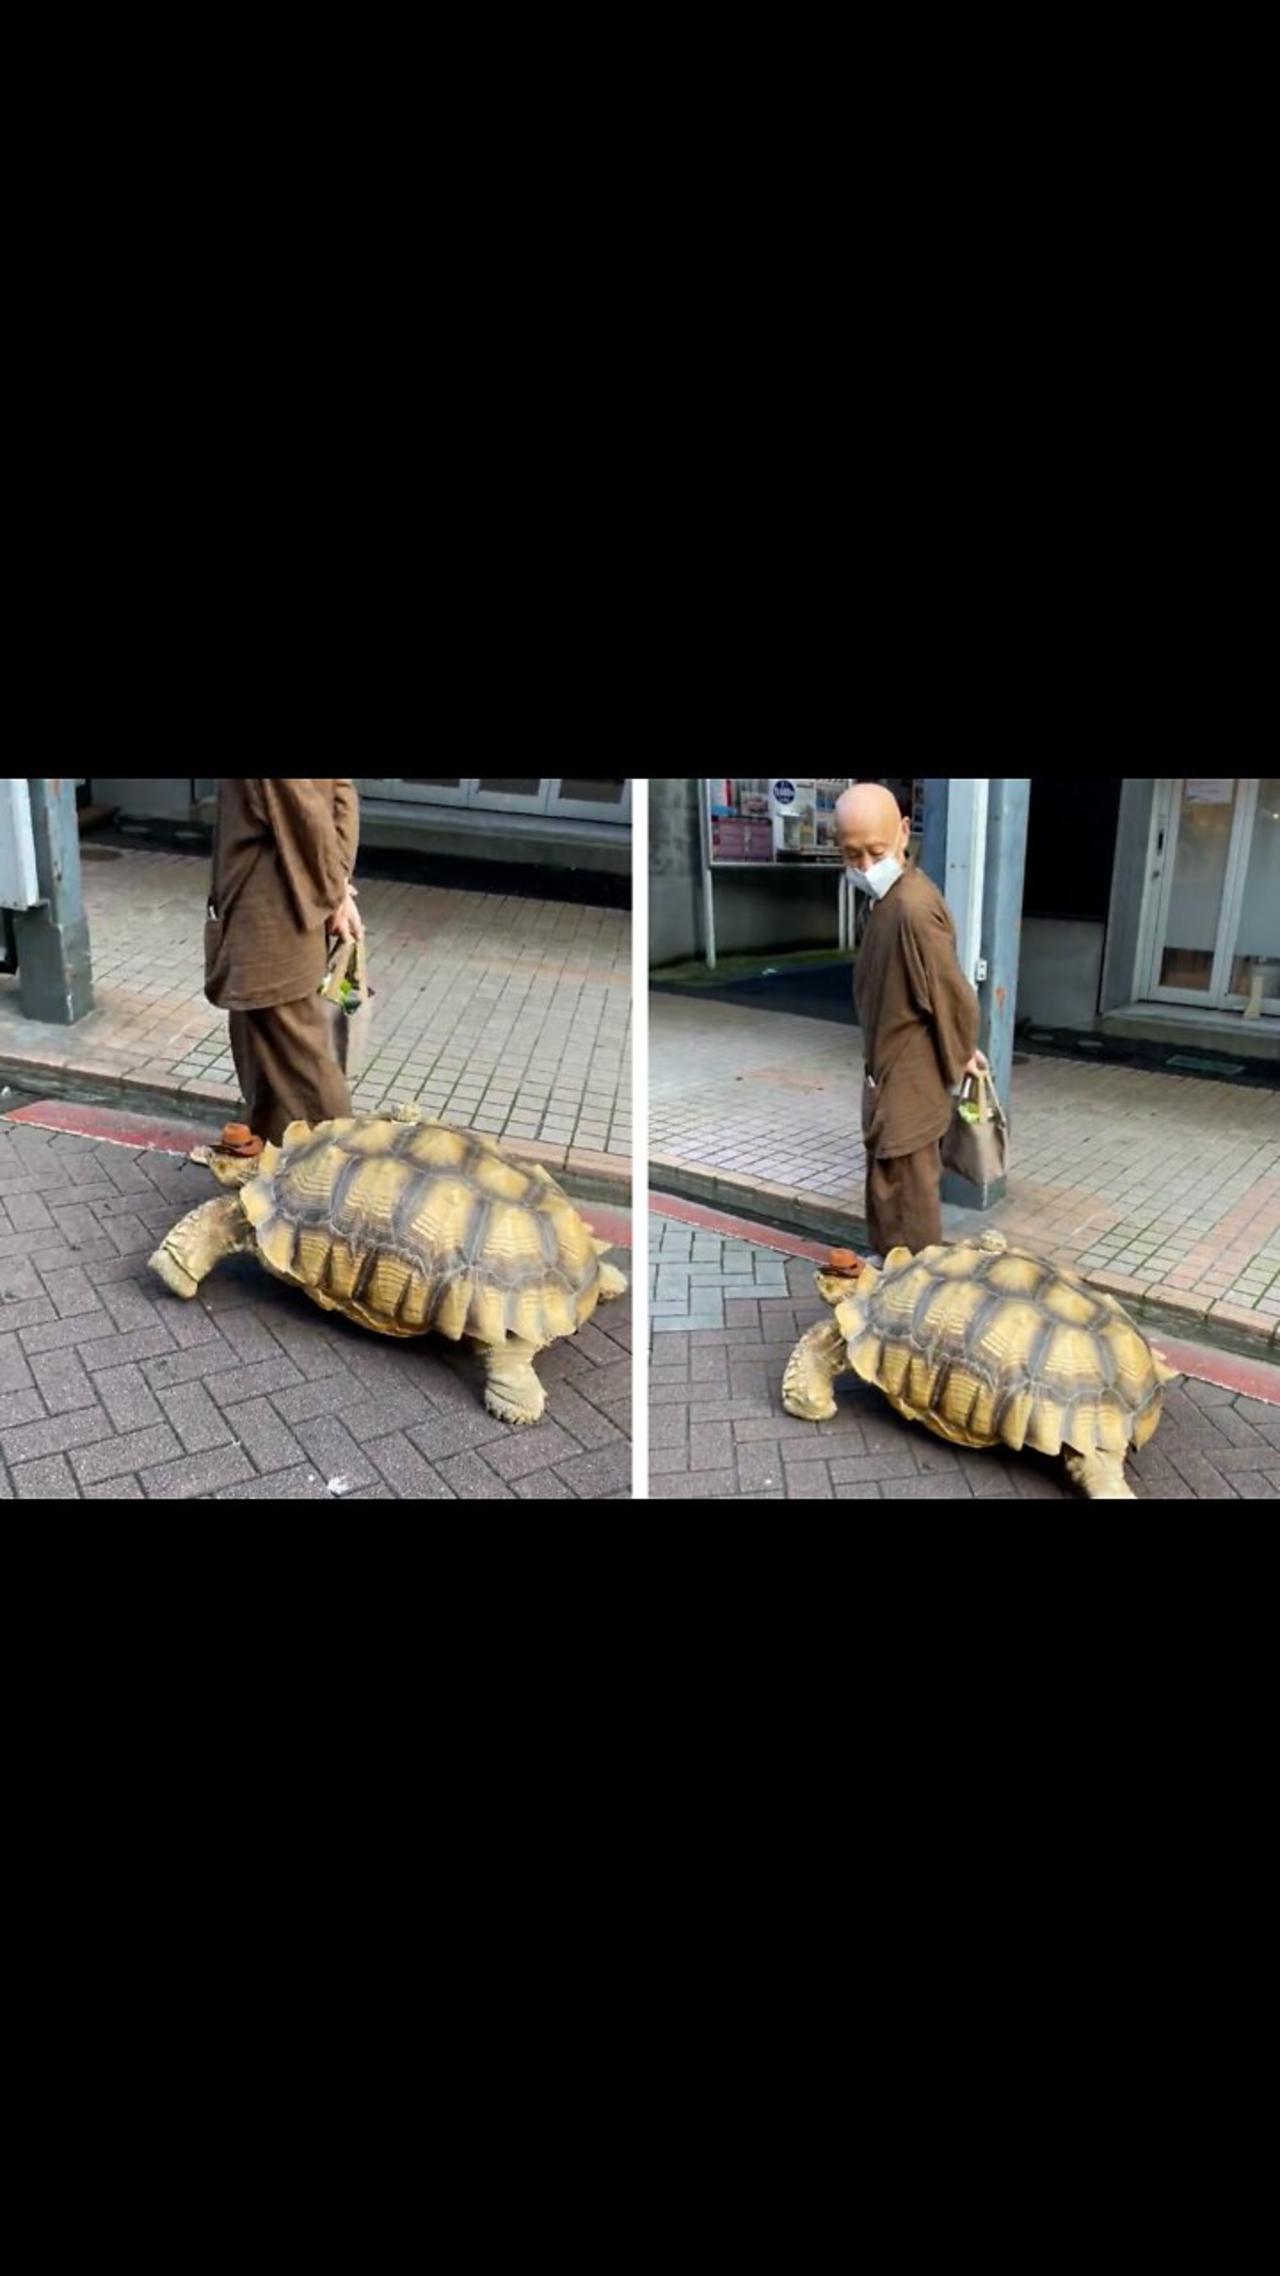 Old Man Walk His Giant Pet Turtle Through Busy Street